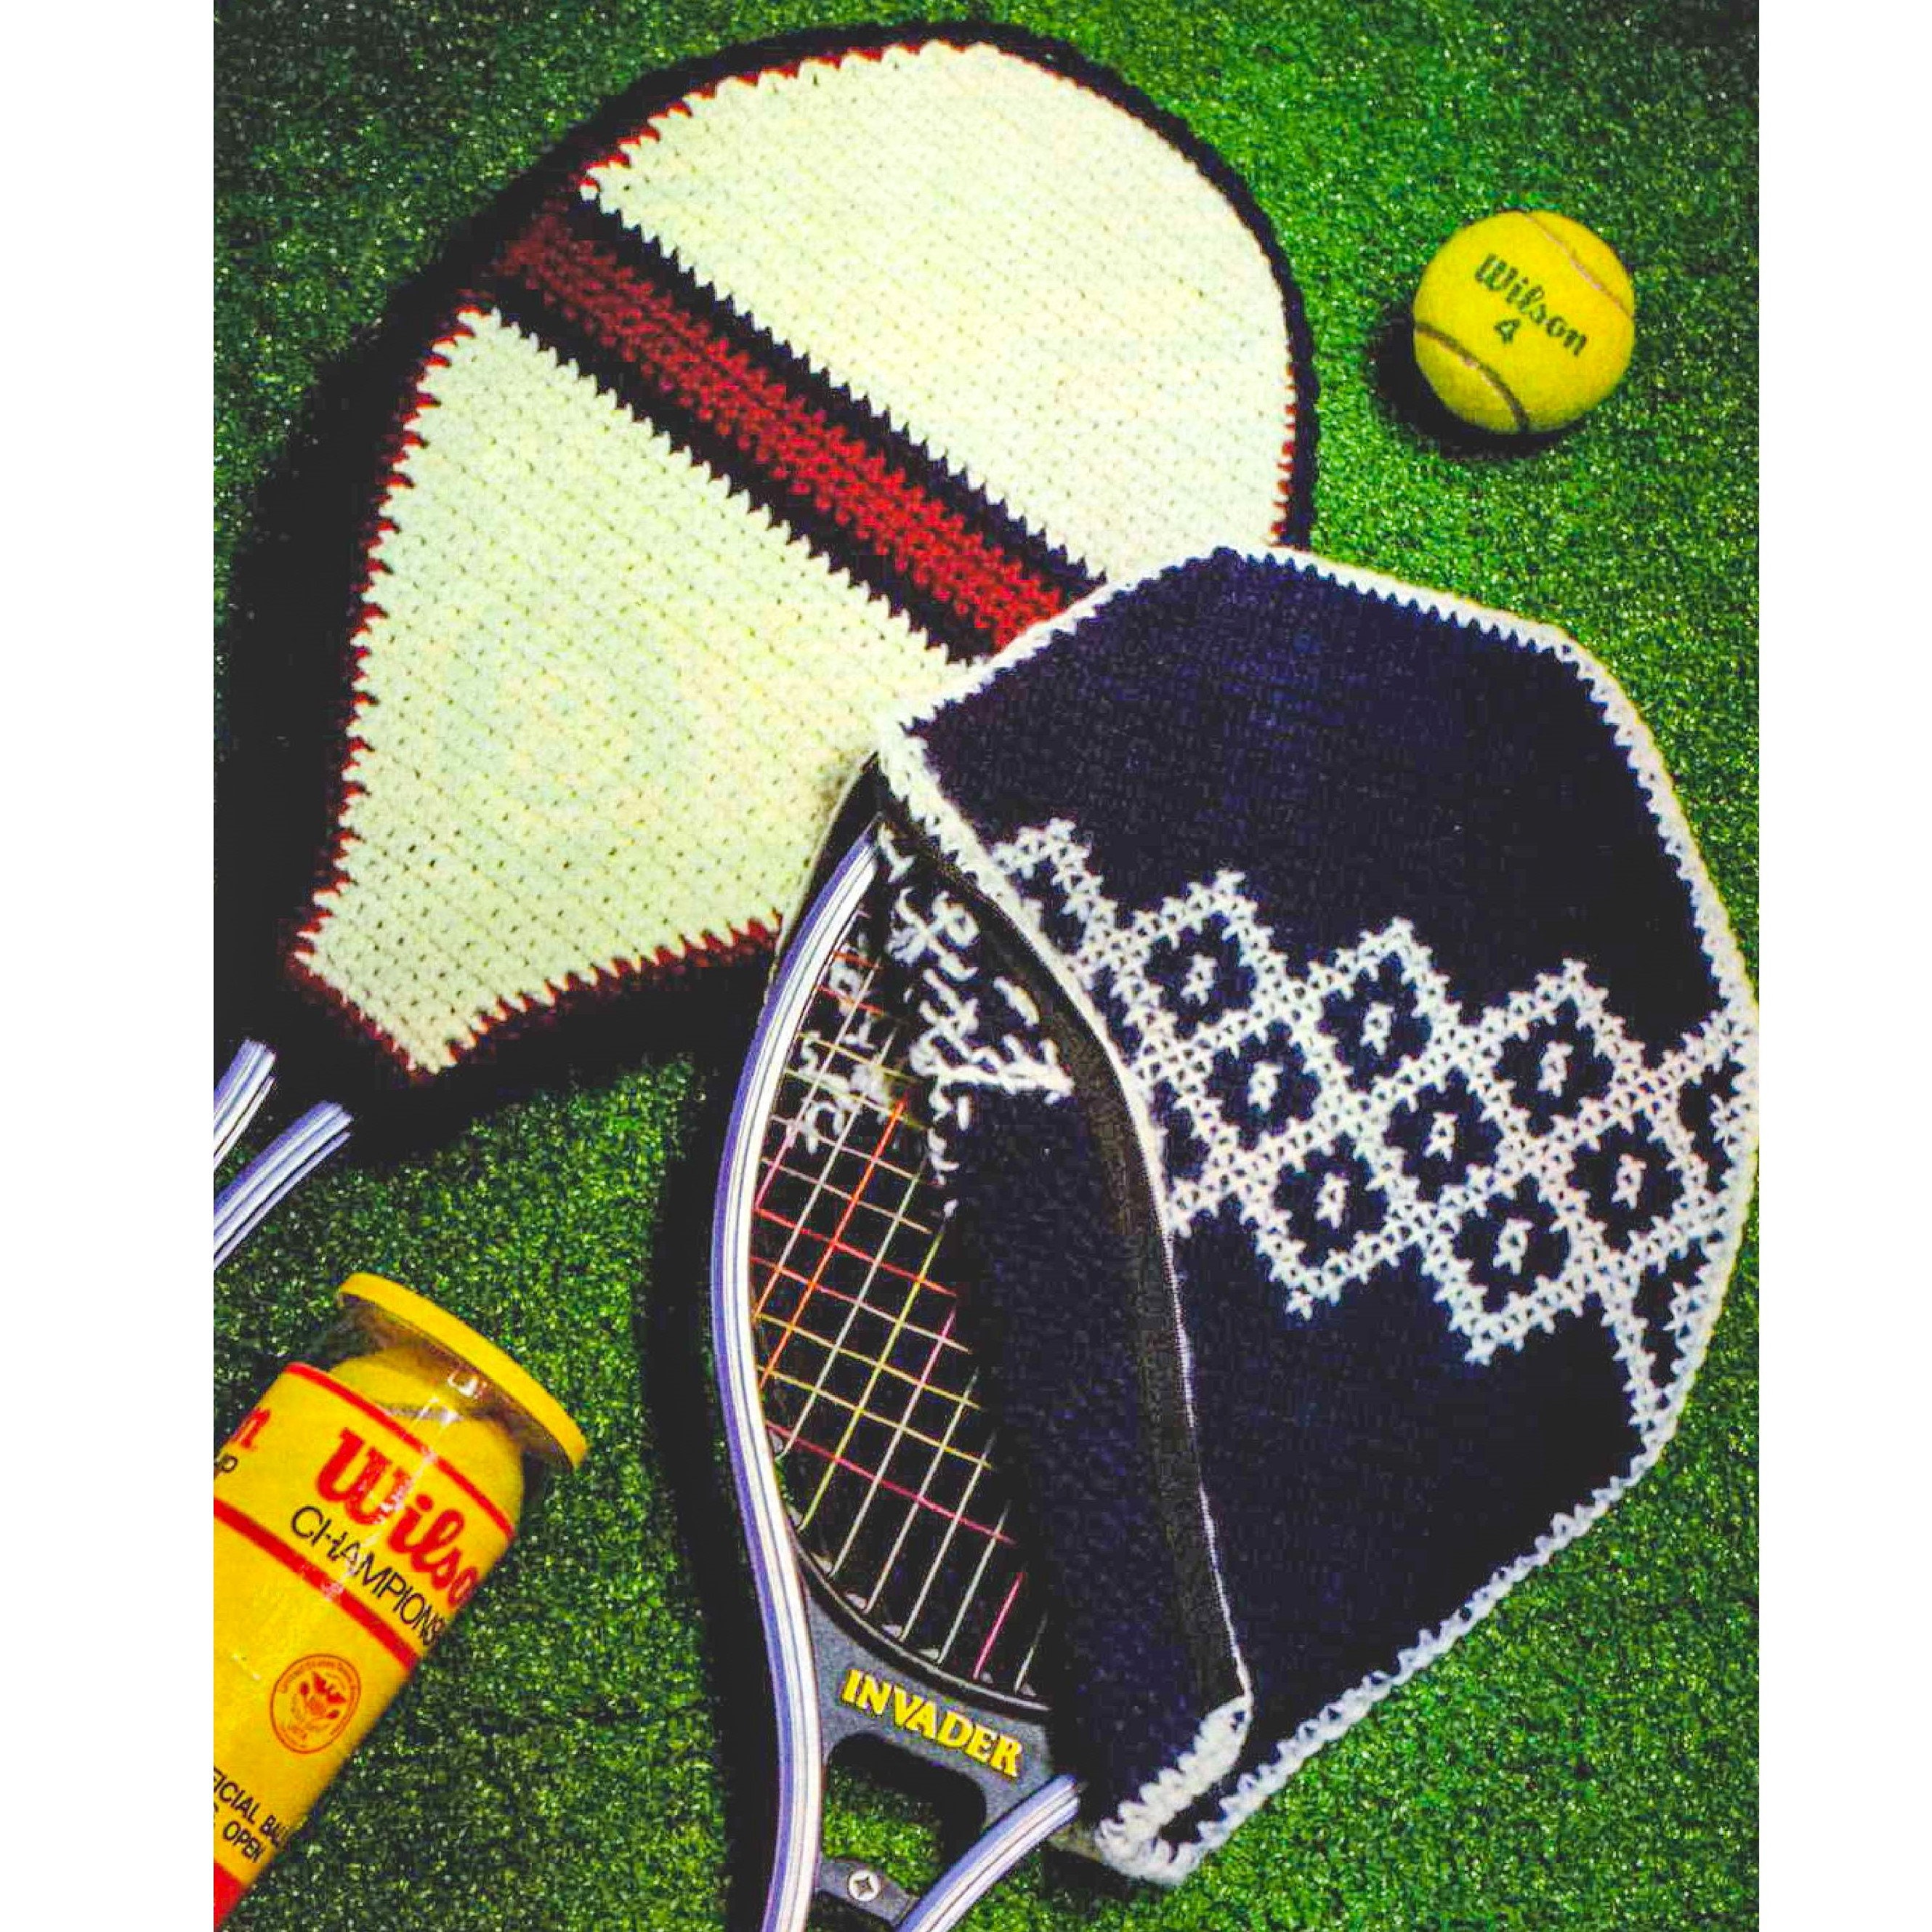 Louis Vuitton Monogram Men's Women's Tennis Racquet and Ball Storage Case  Bag